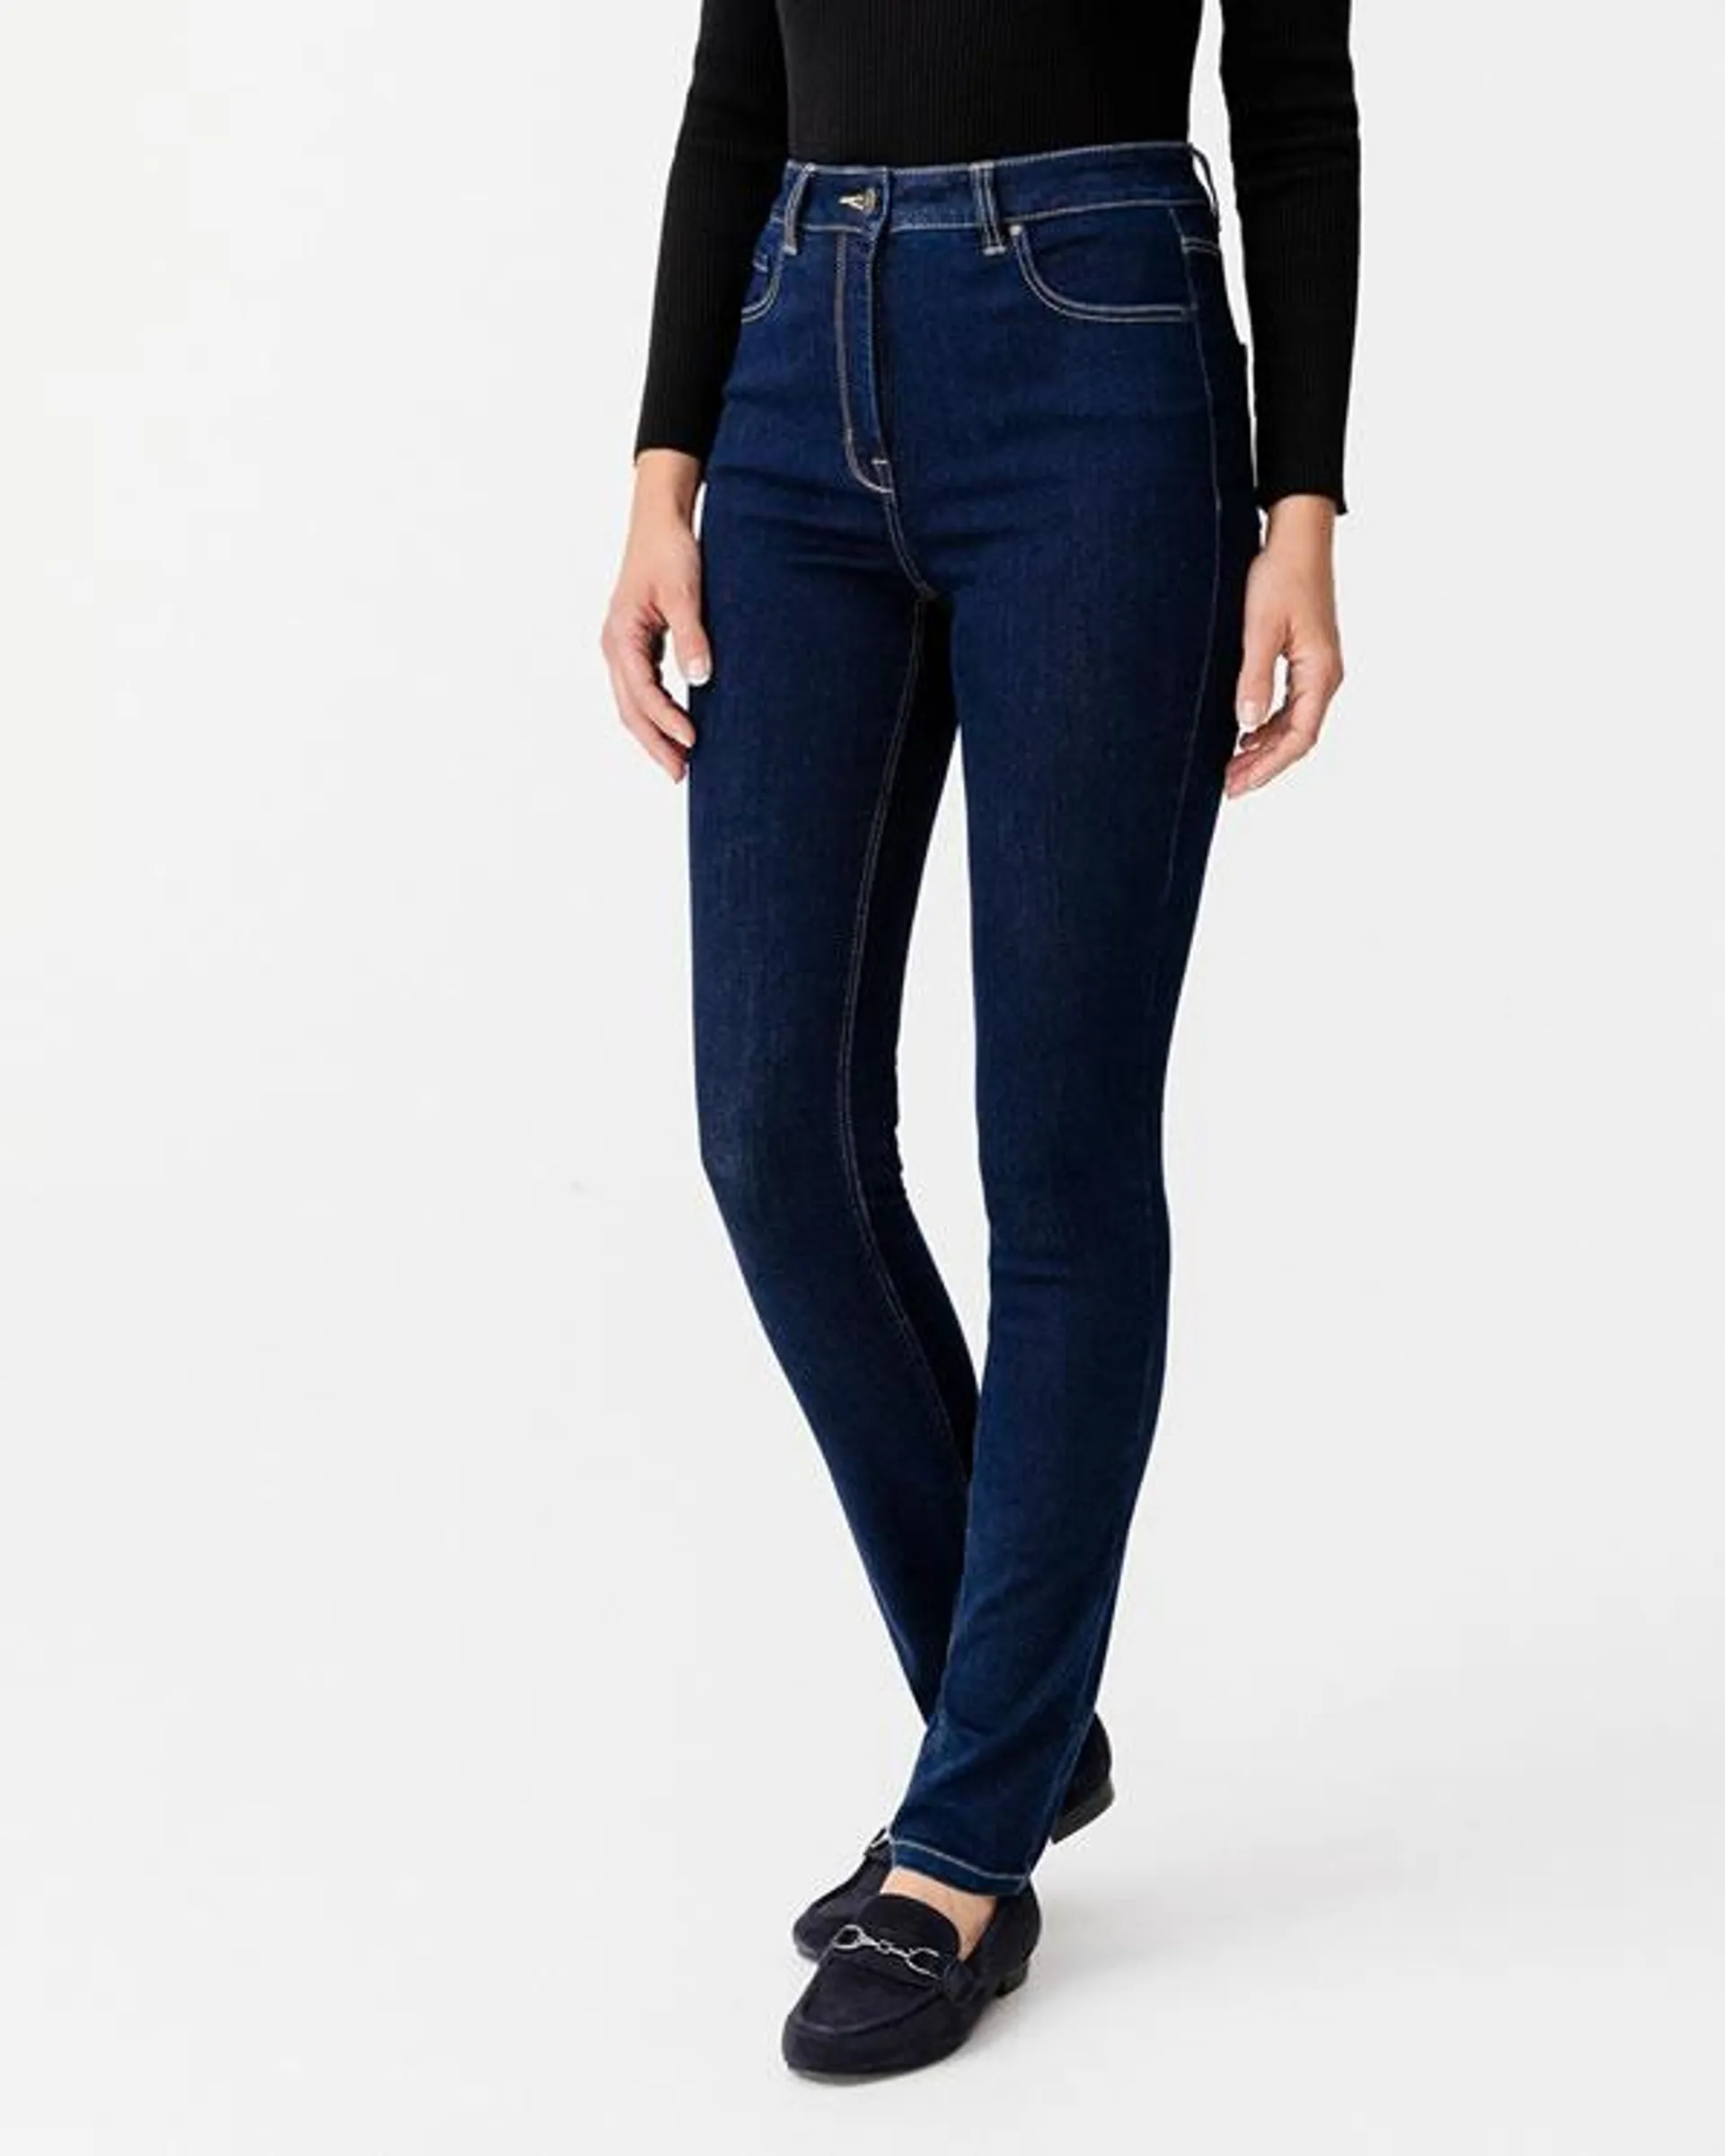 Jeans "platte buik" Perfect Fit by Damart Slim fit, hoge taille